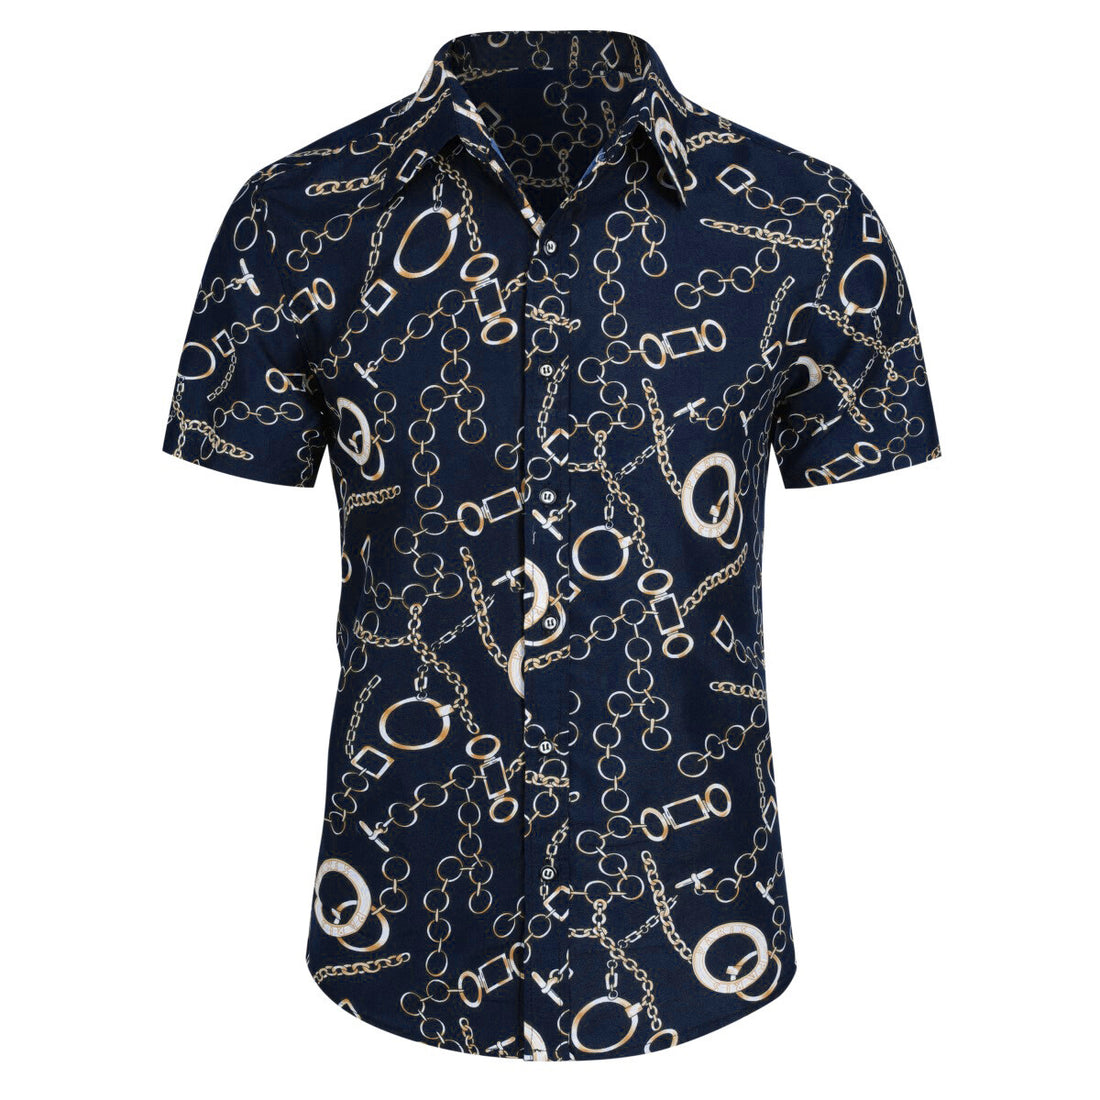 Mens 2-Piece Hawaii Print Style Summer Suit Navy